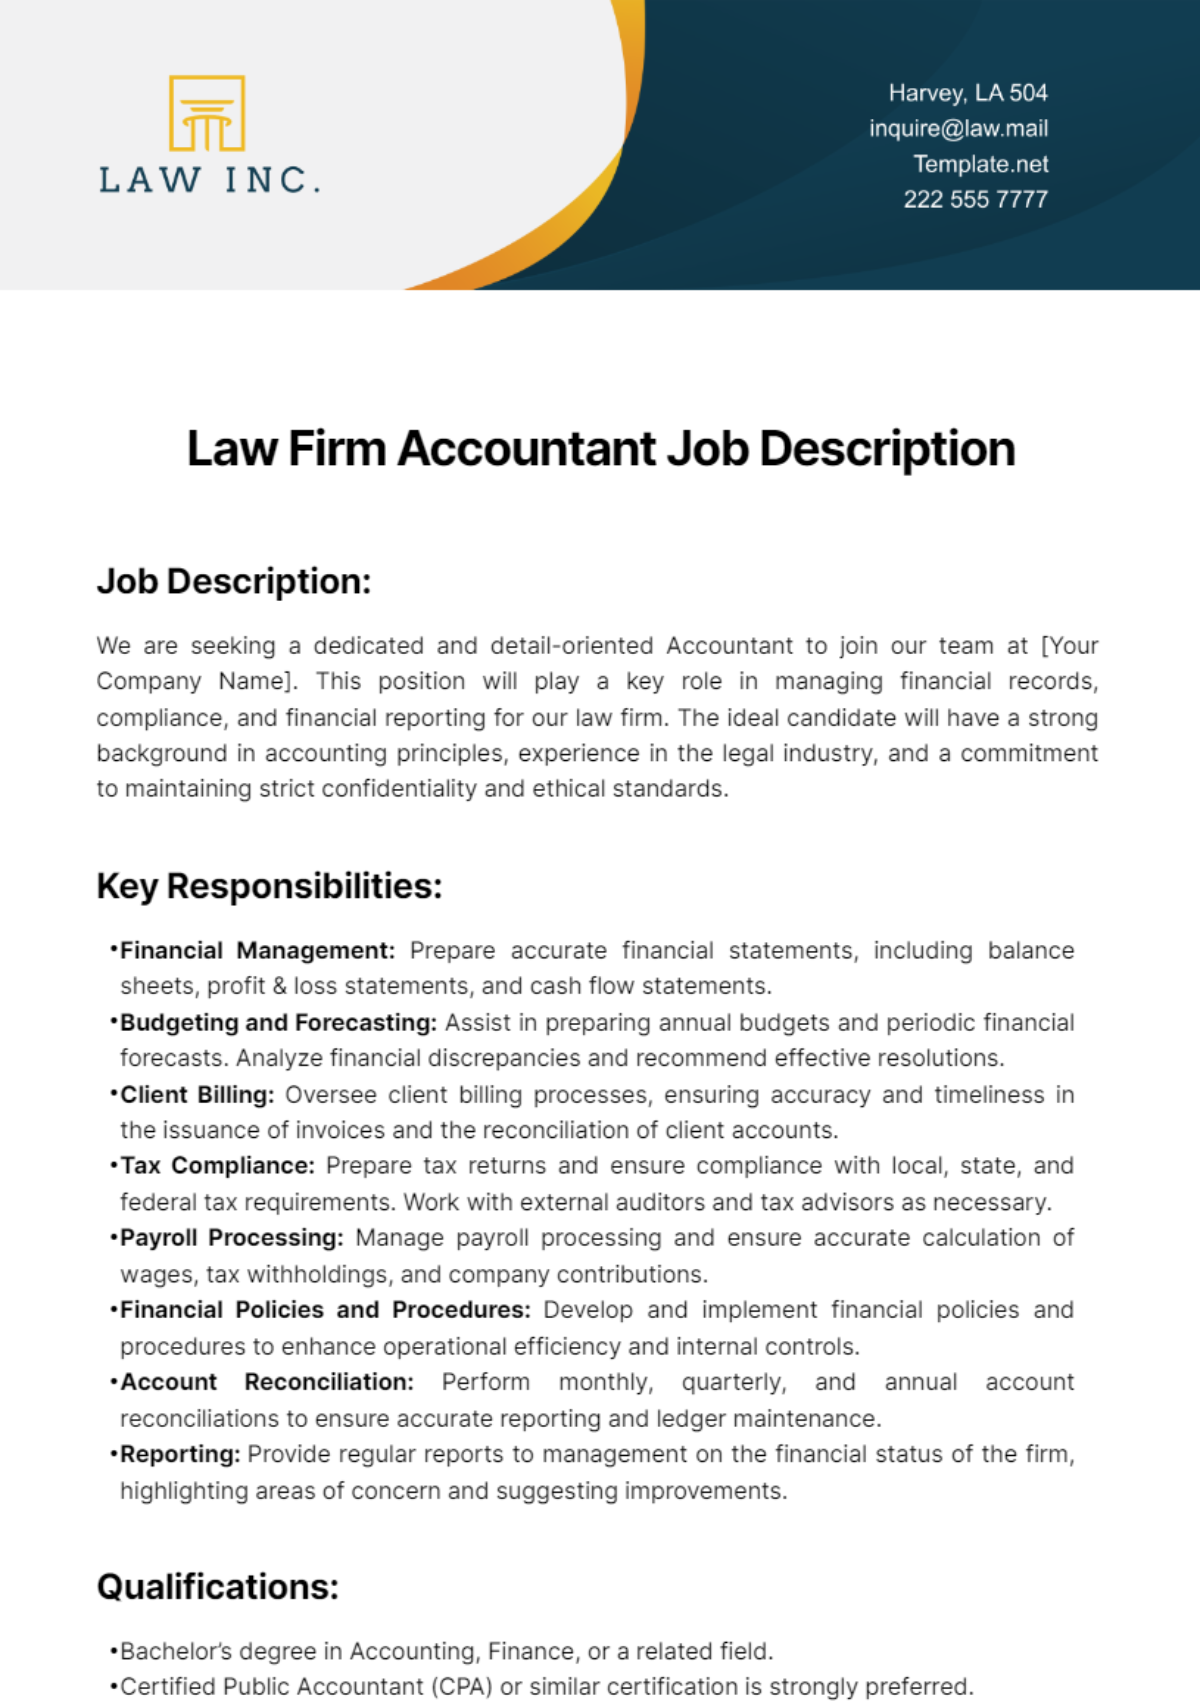 Free Law Firm Accountant Job Description Template